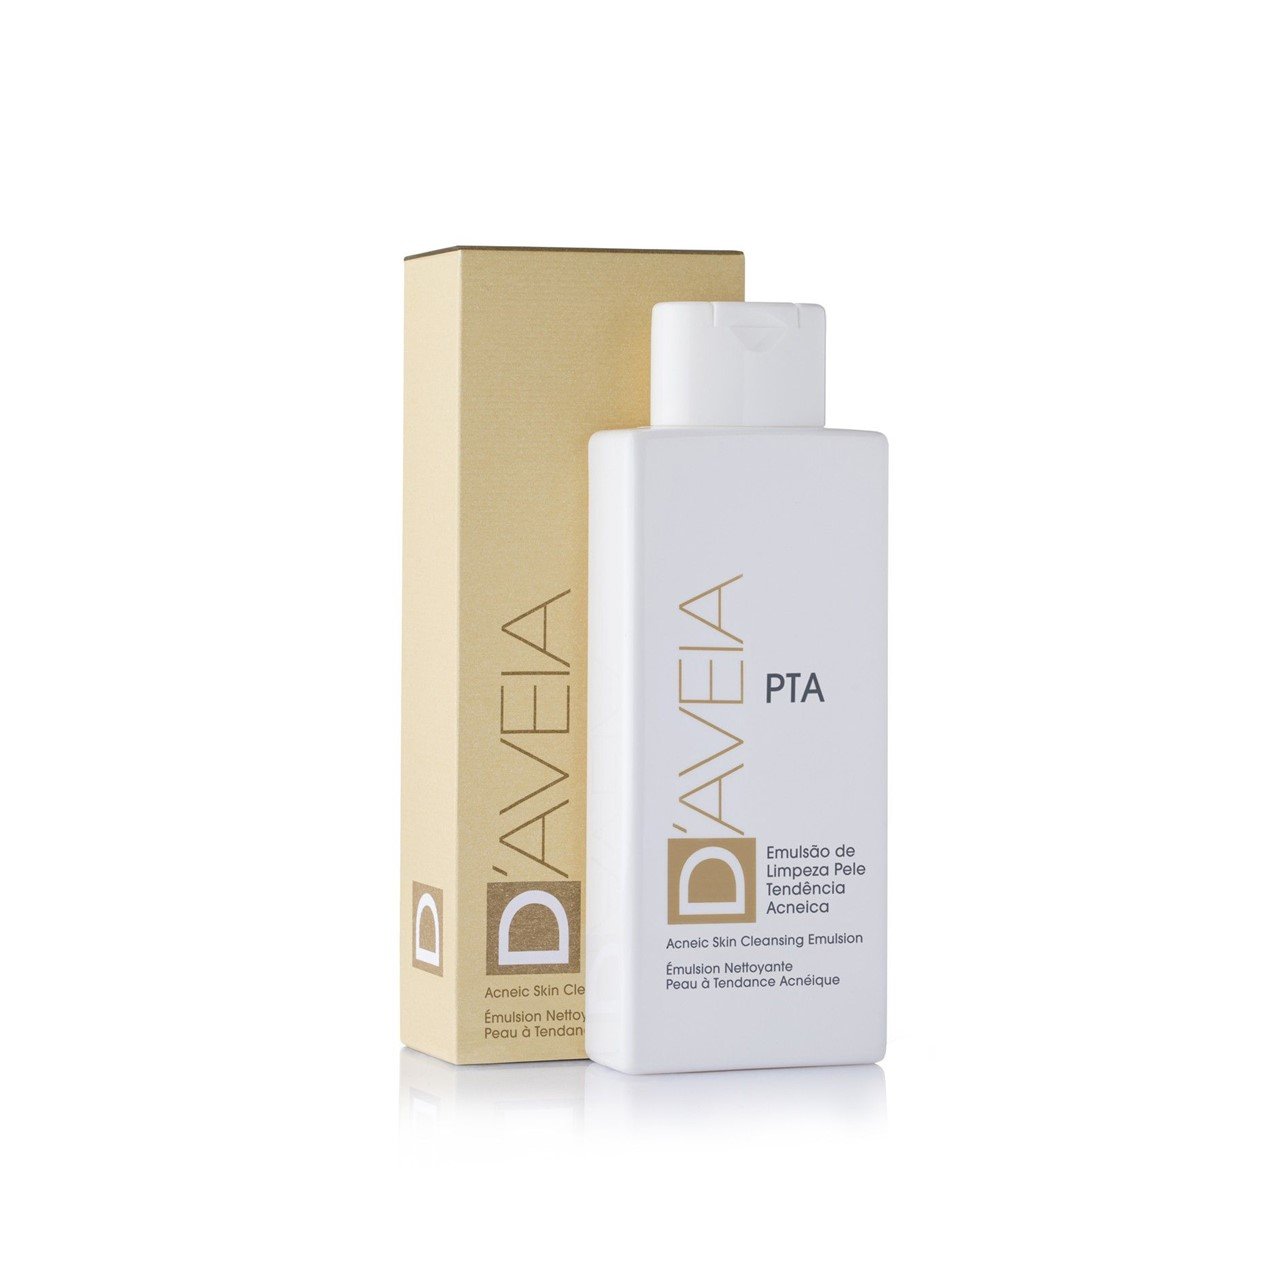 D'AVEIA PTA Acneic Skin Cleansing Emulsion 200ml